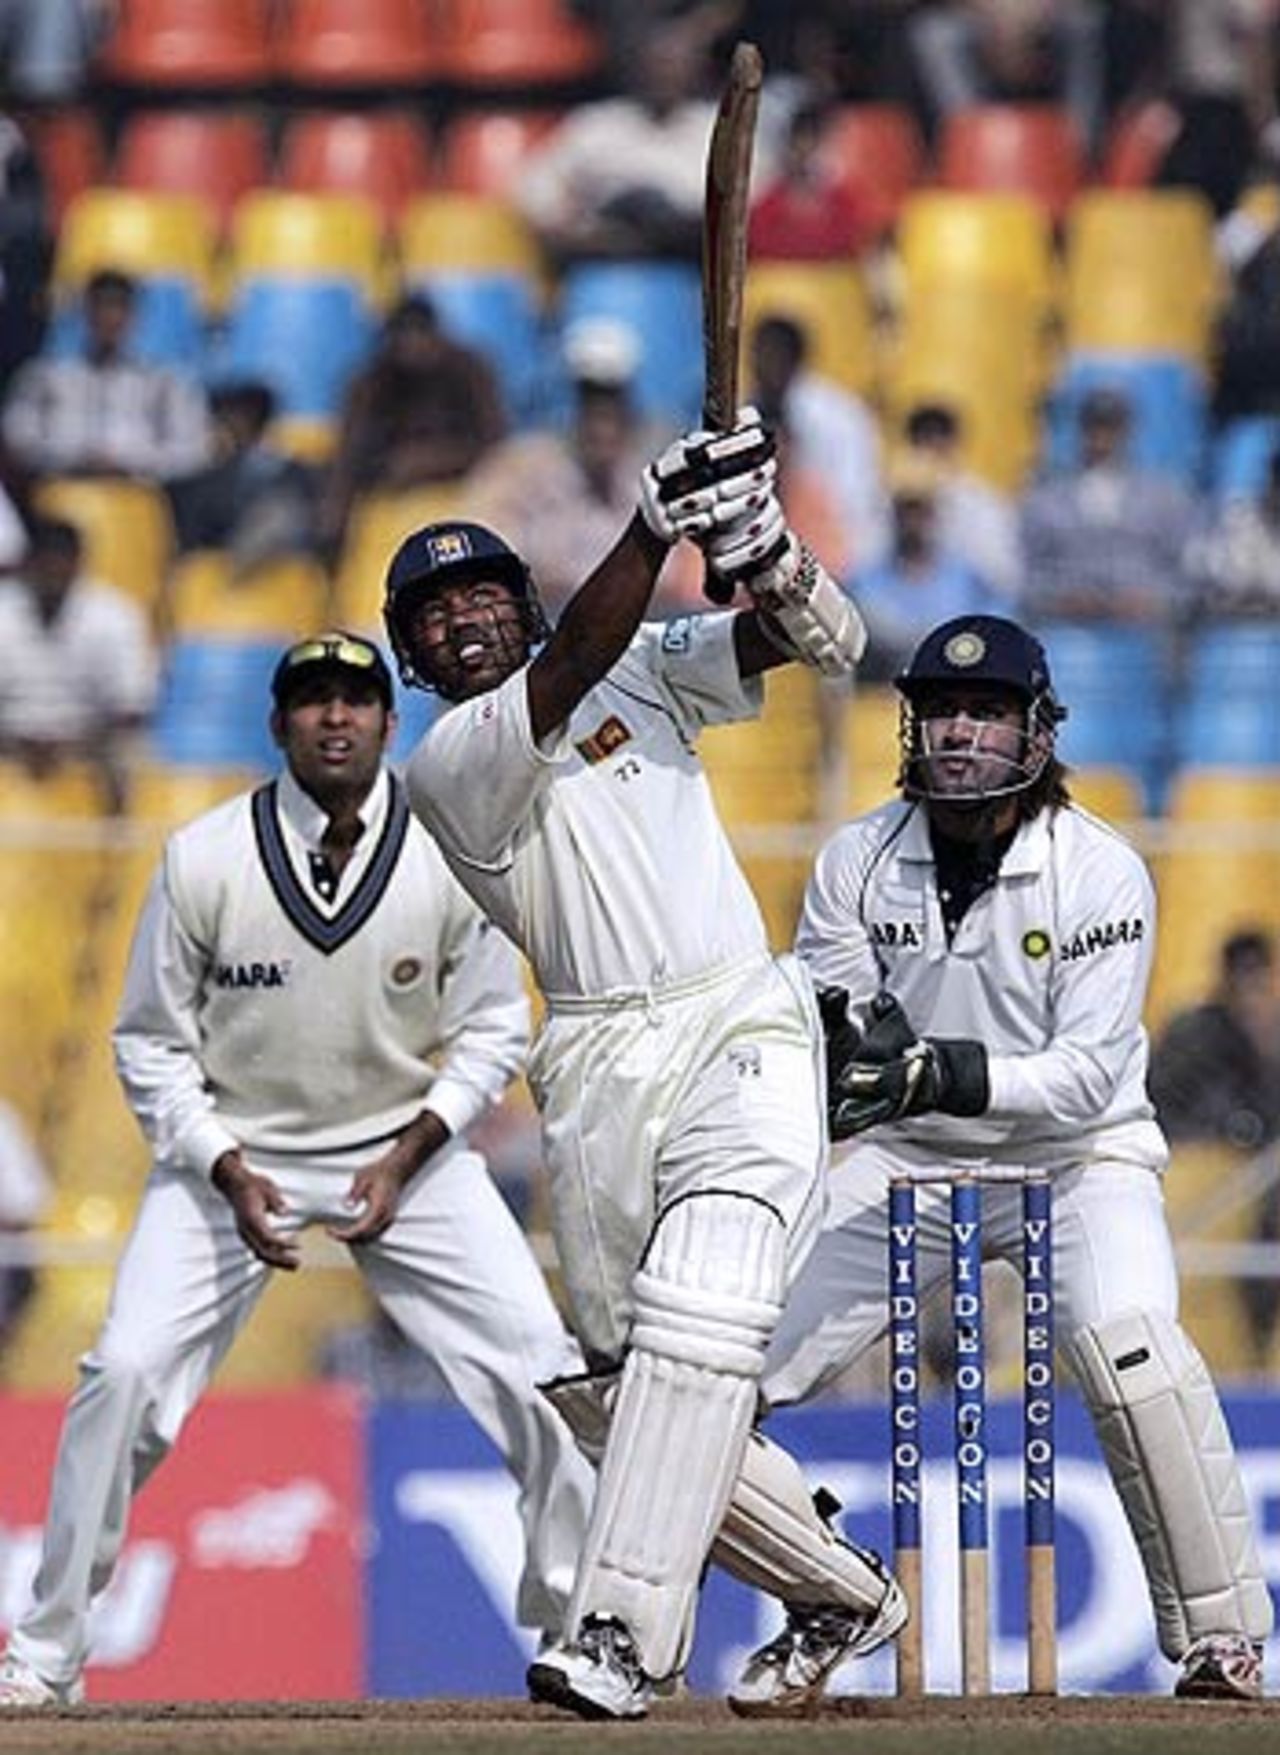 Malinga Bandara clubs a six as Sri Lanka avert the follow-on, India v Sri Lanka, 3rd Test, Ahmedabad, December 20, 2005